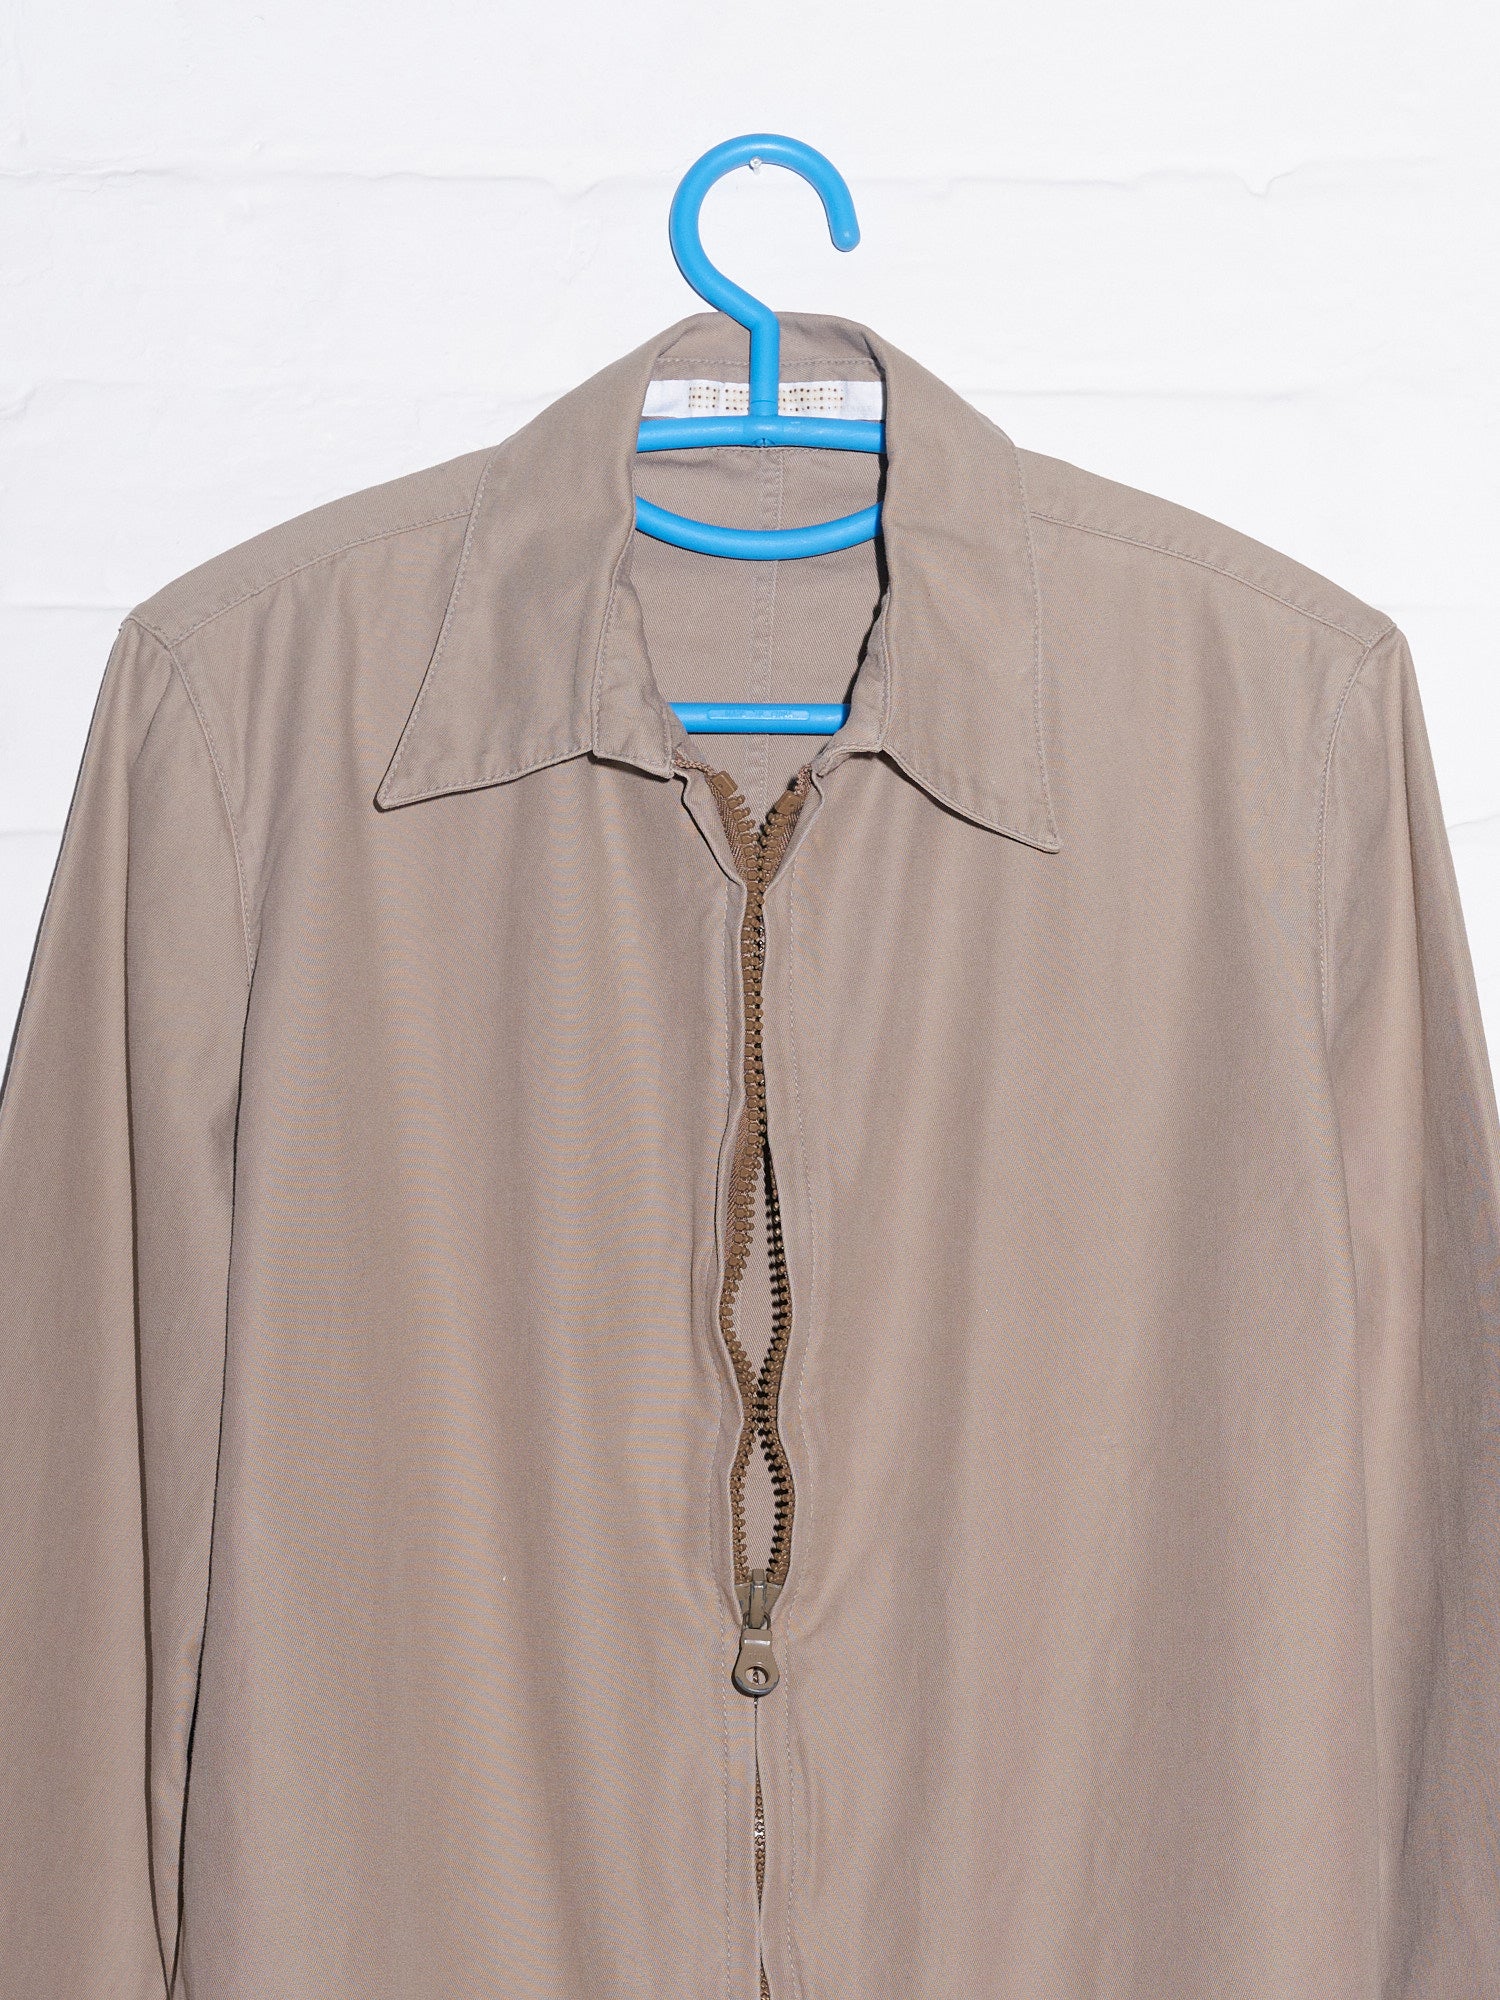 Rip Van Winkle 1990s beige cotton drill zipped shirt jacket - S